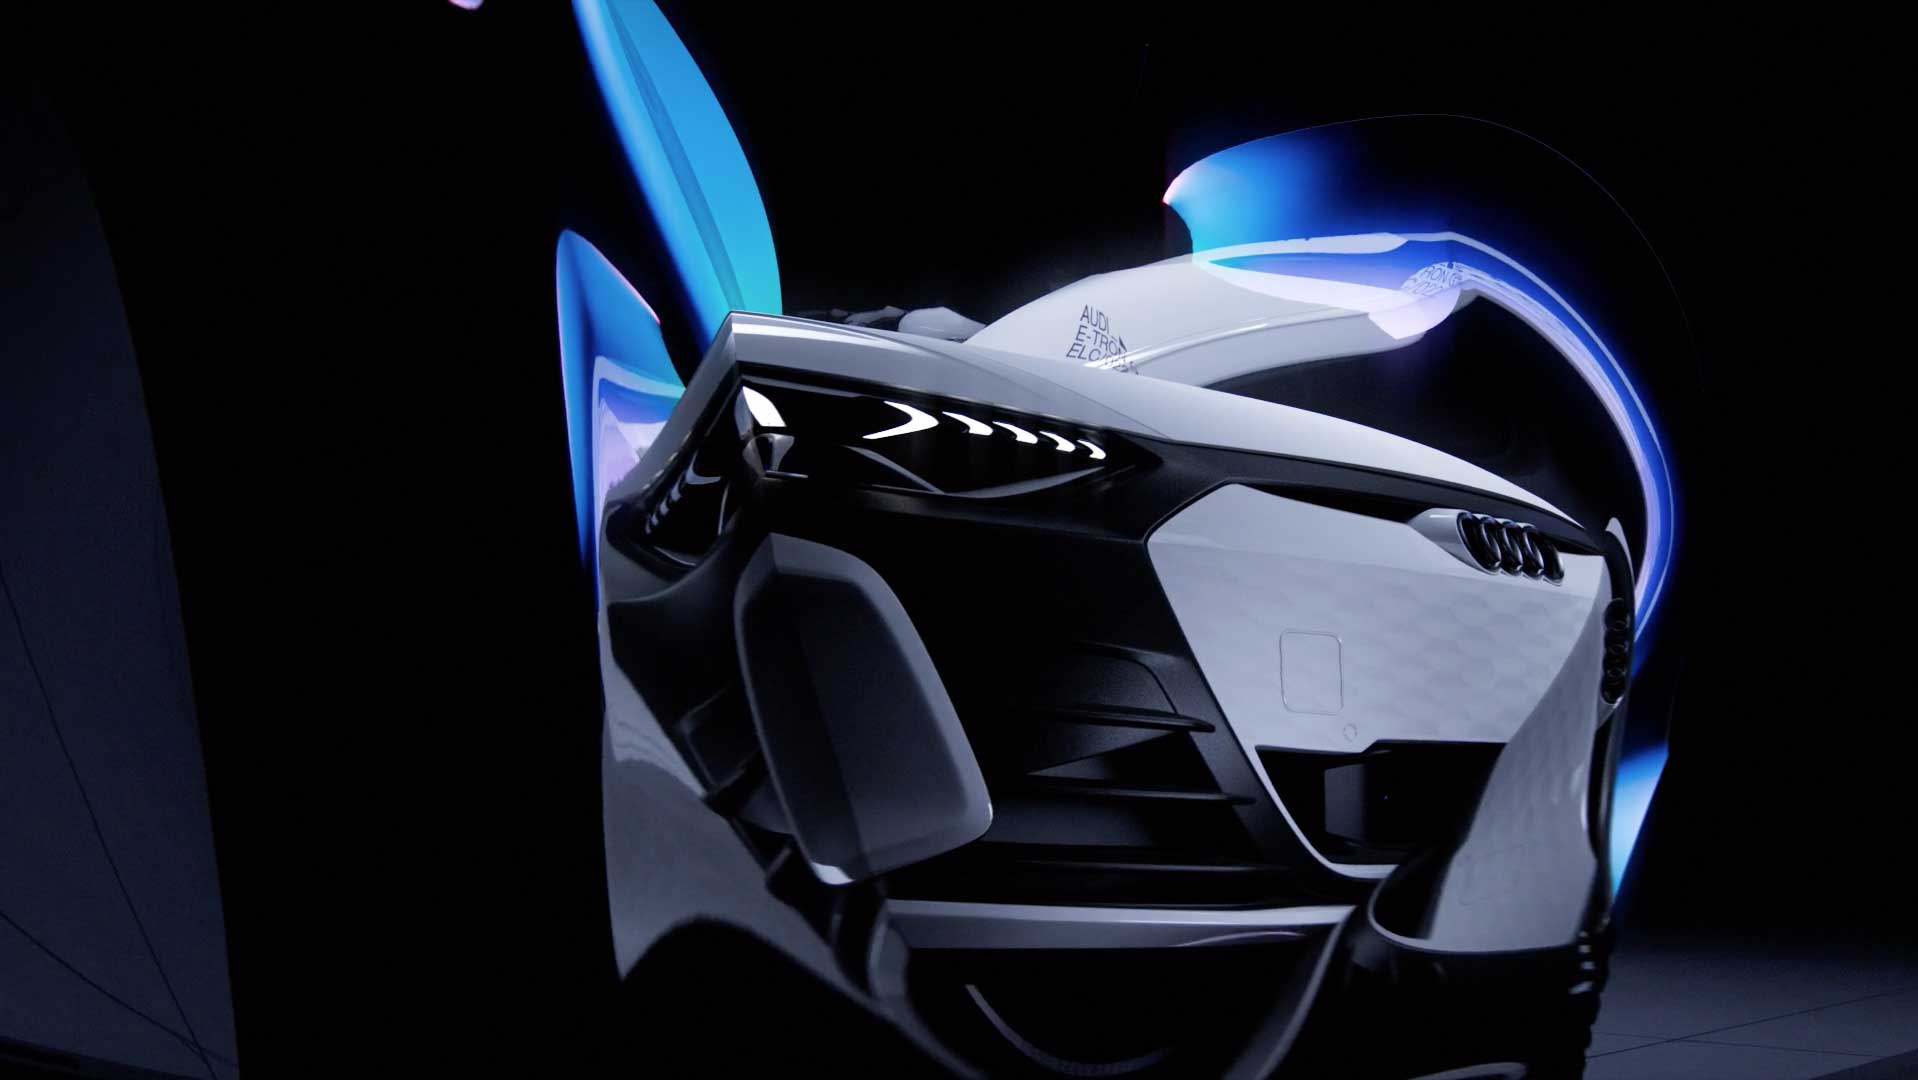 Audi ETron Reveal Film by Pandayoghurt | STASH MAGAZINE